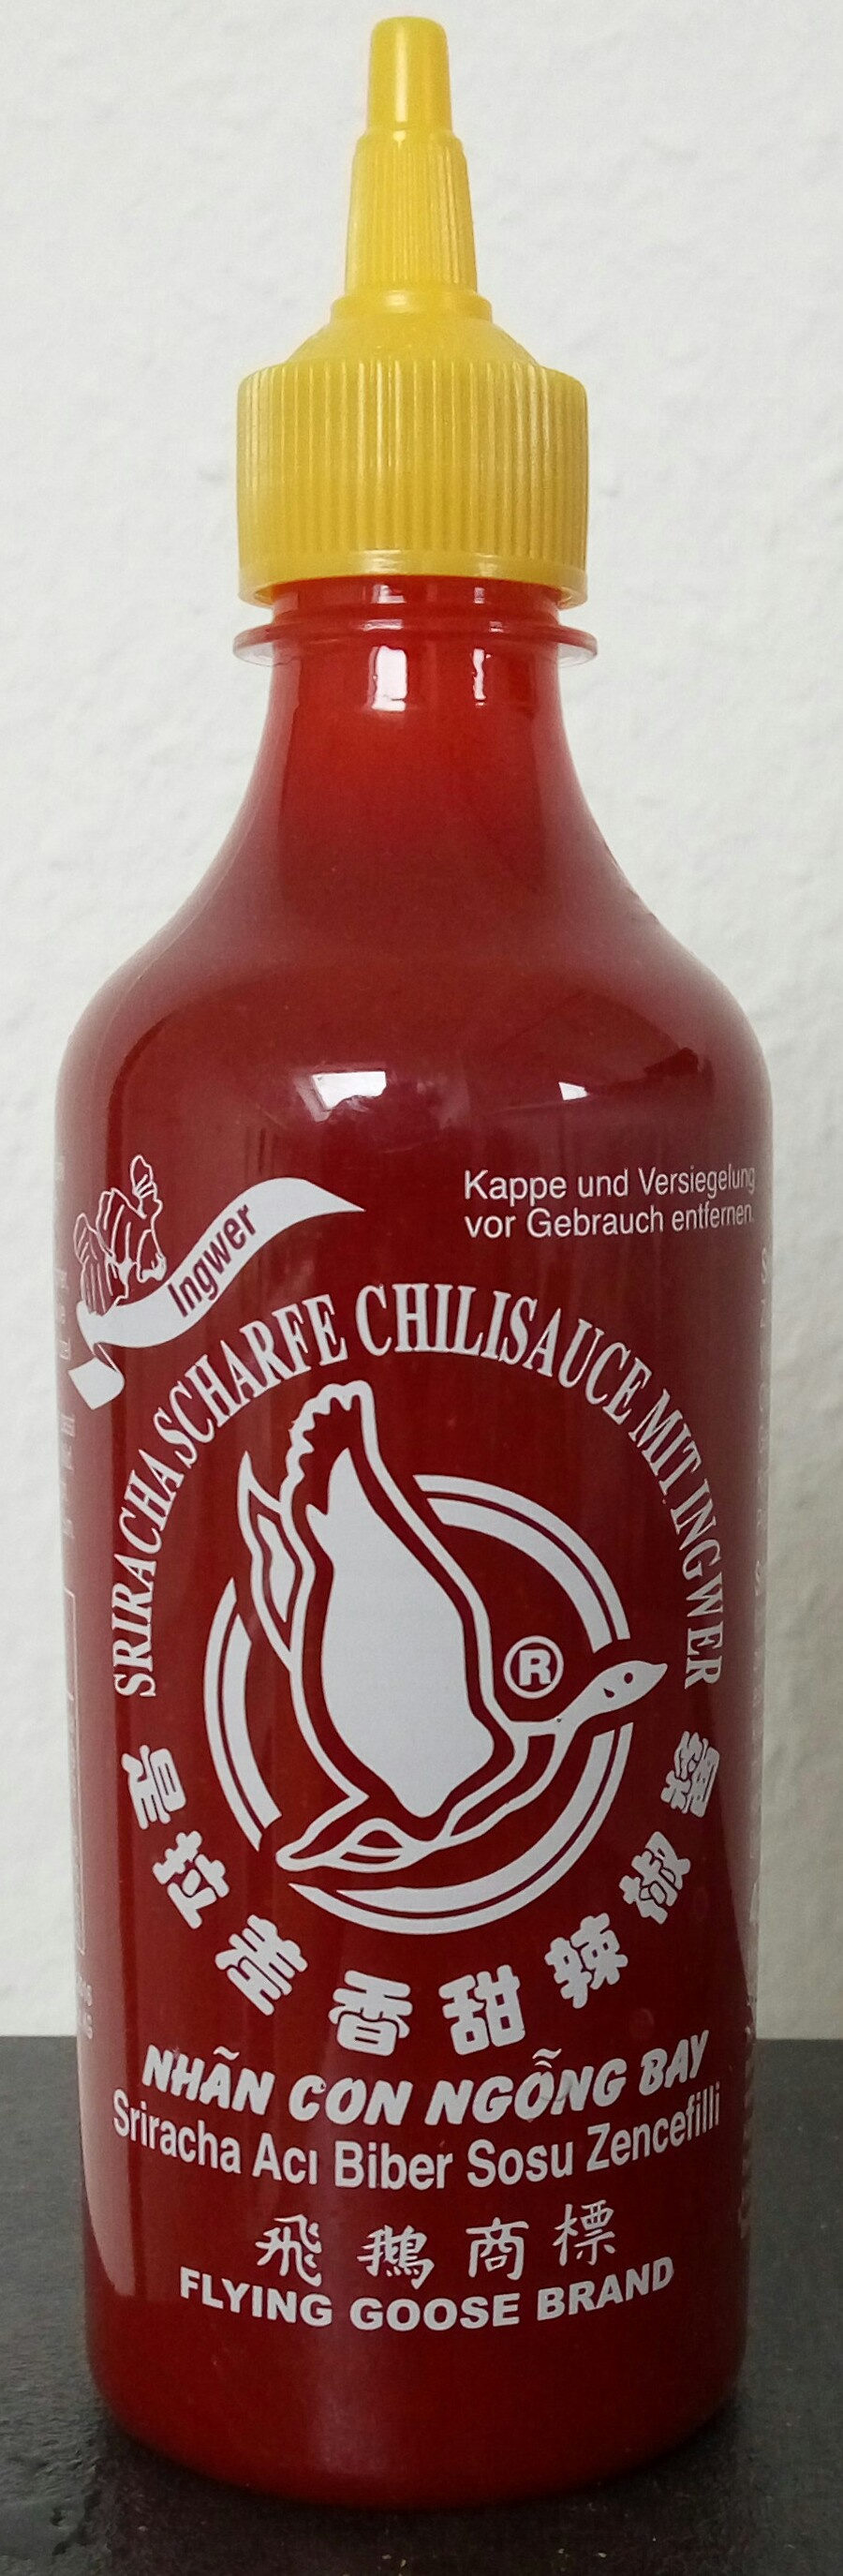 Sriracha scharfe Chilisauce mit INGWER - Product